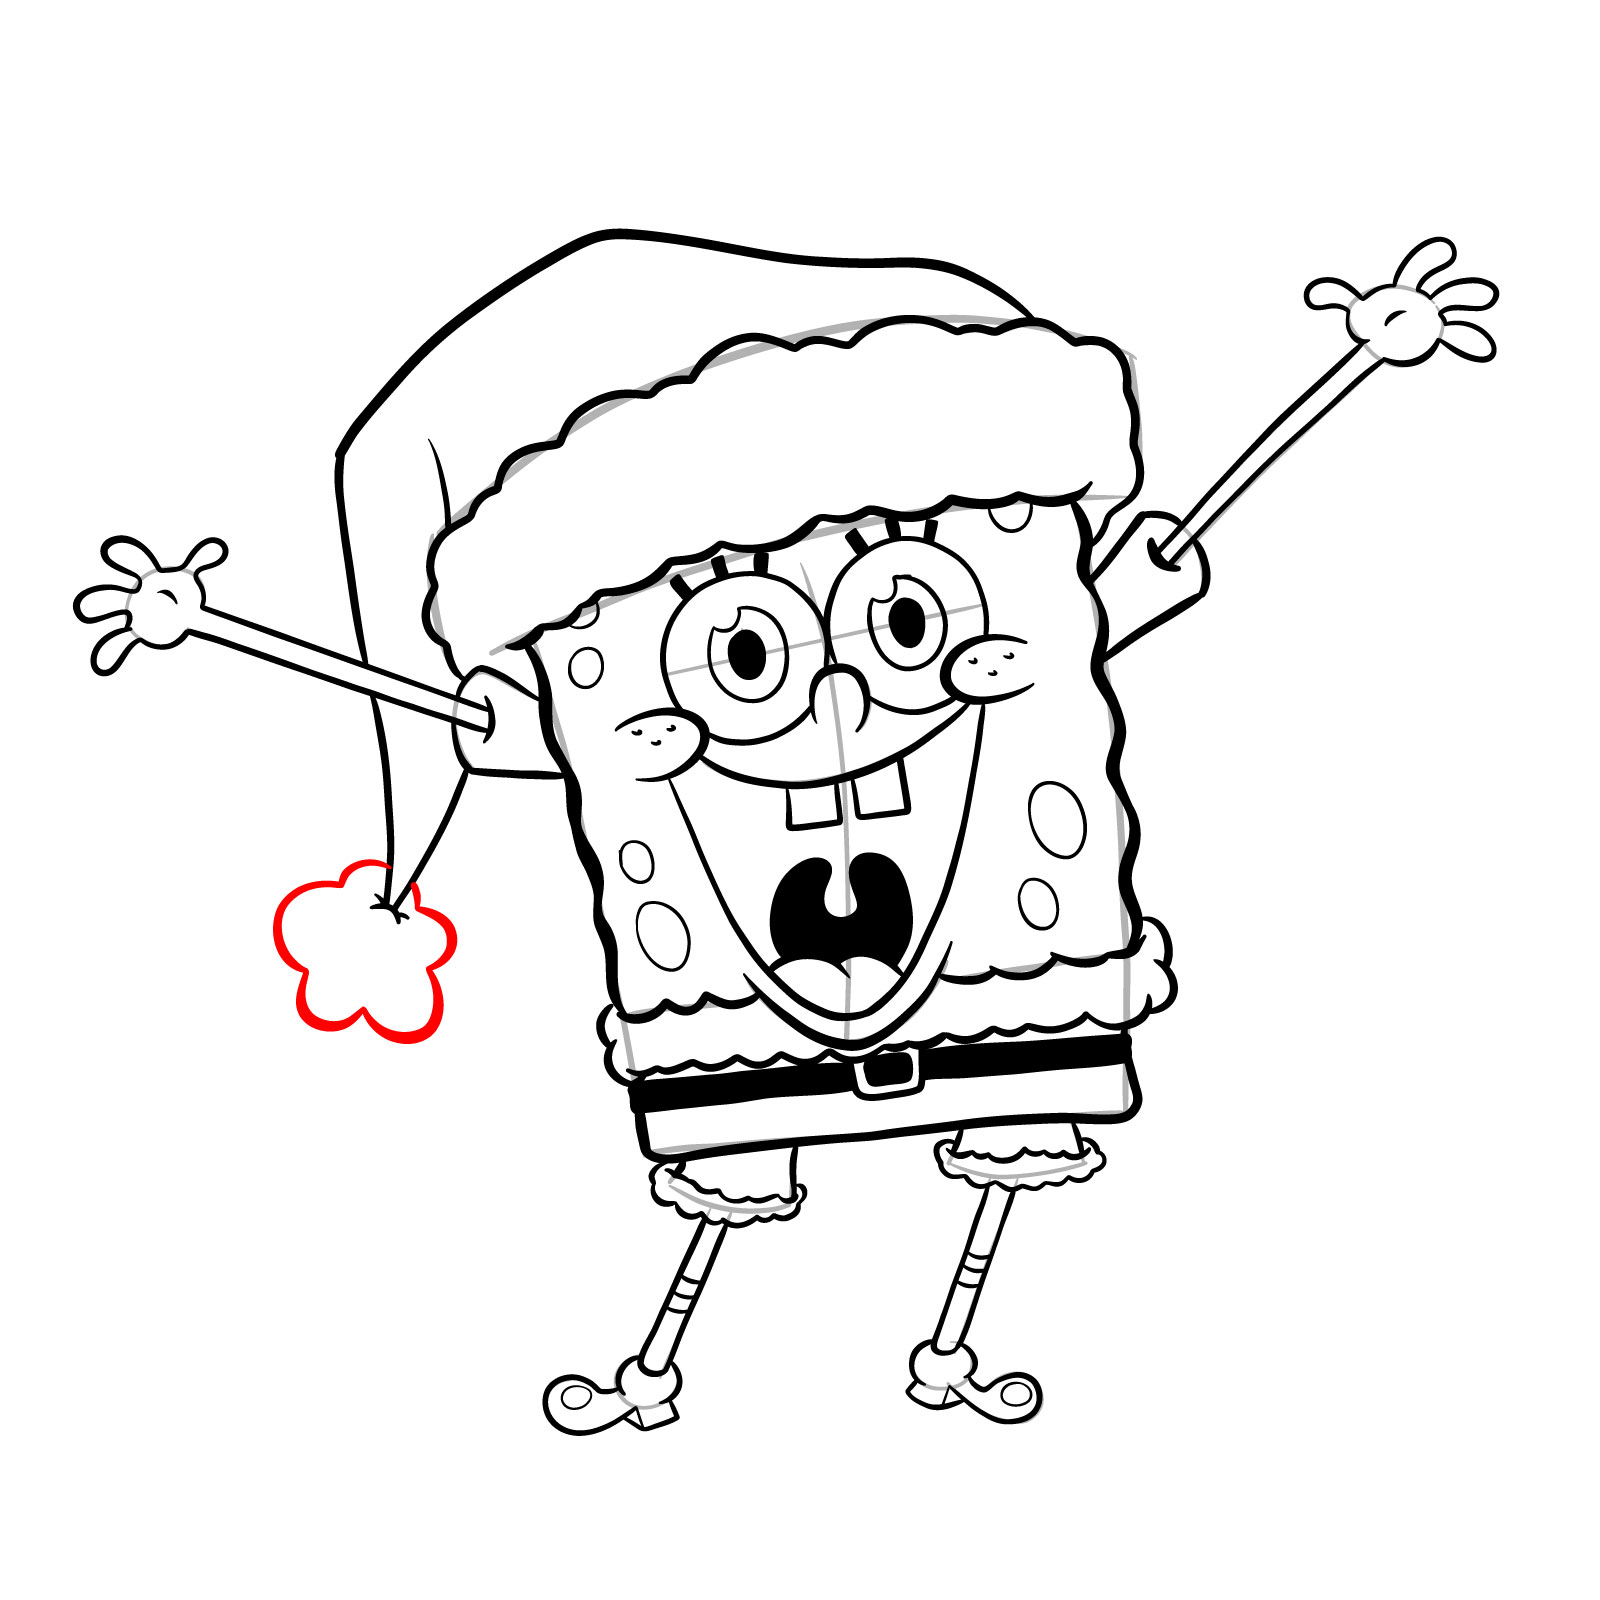 How to draw Santa SpongeBob SquarePants - step 26